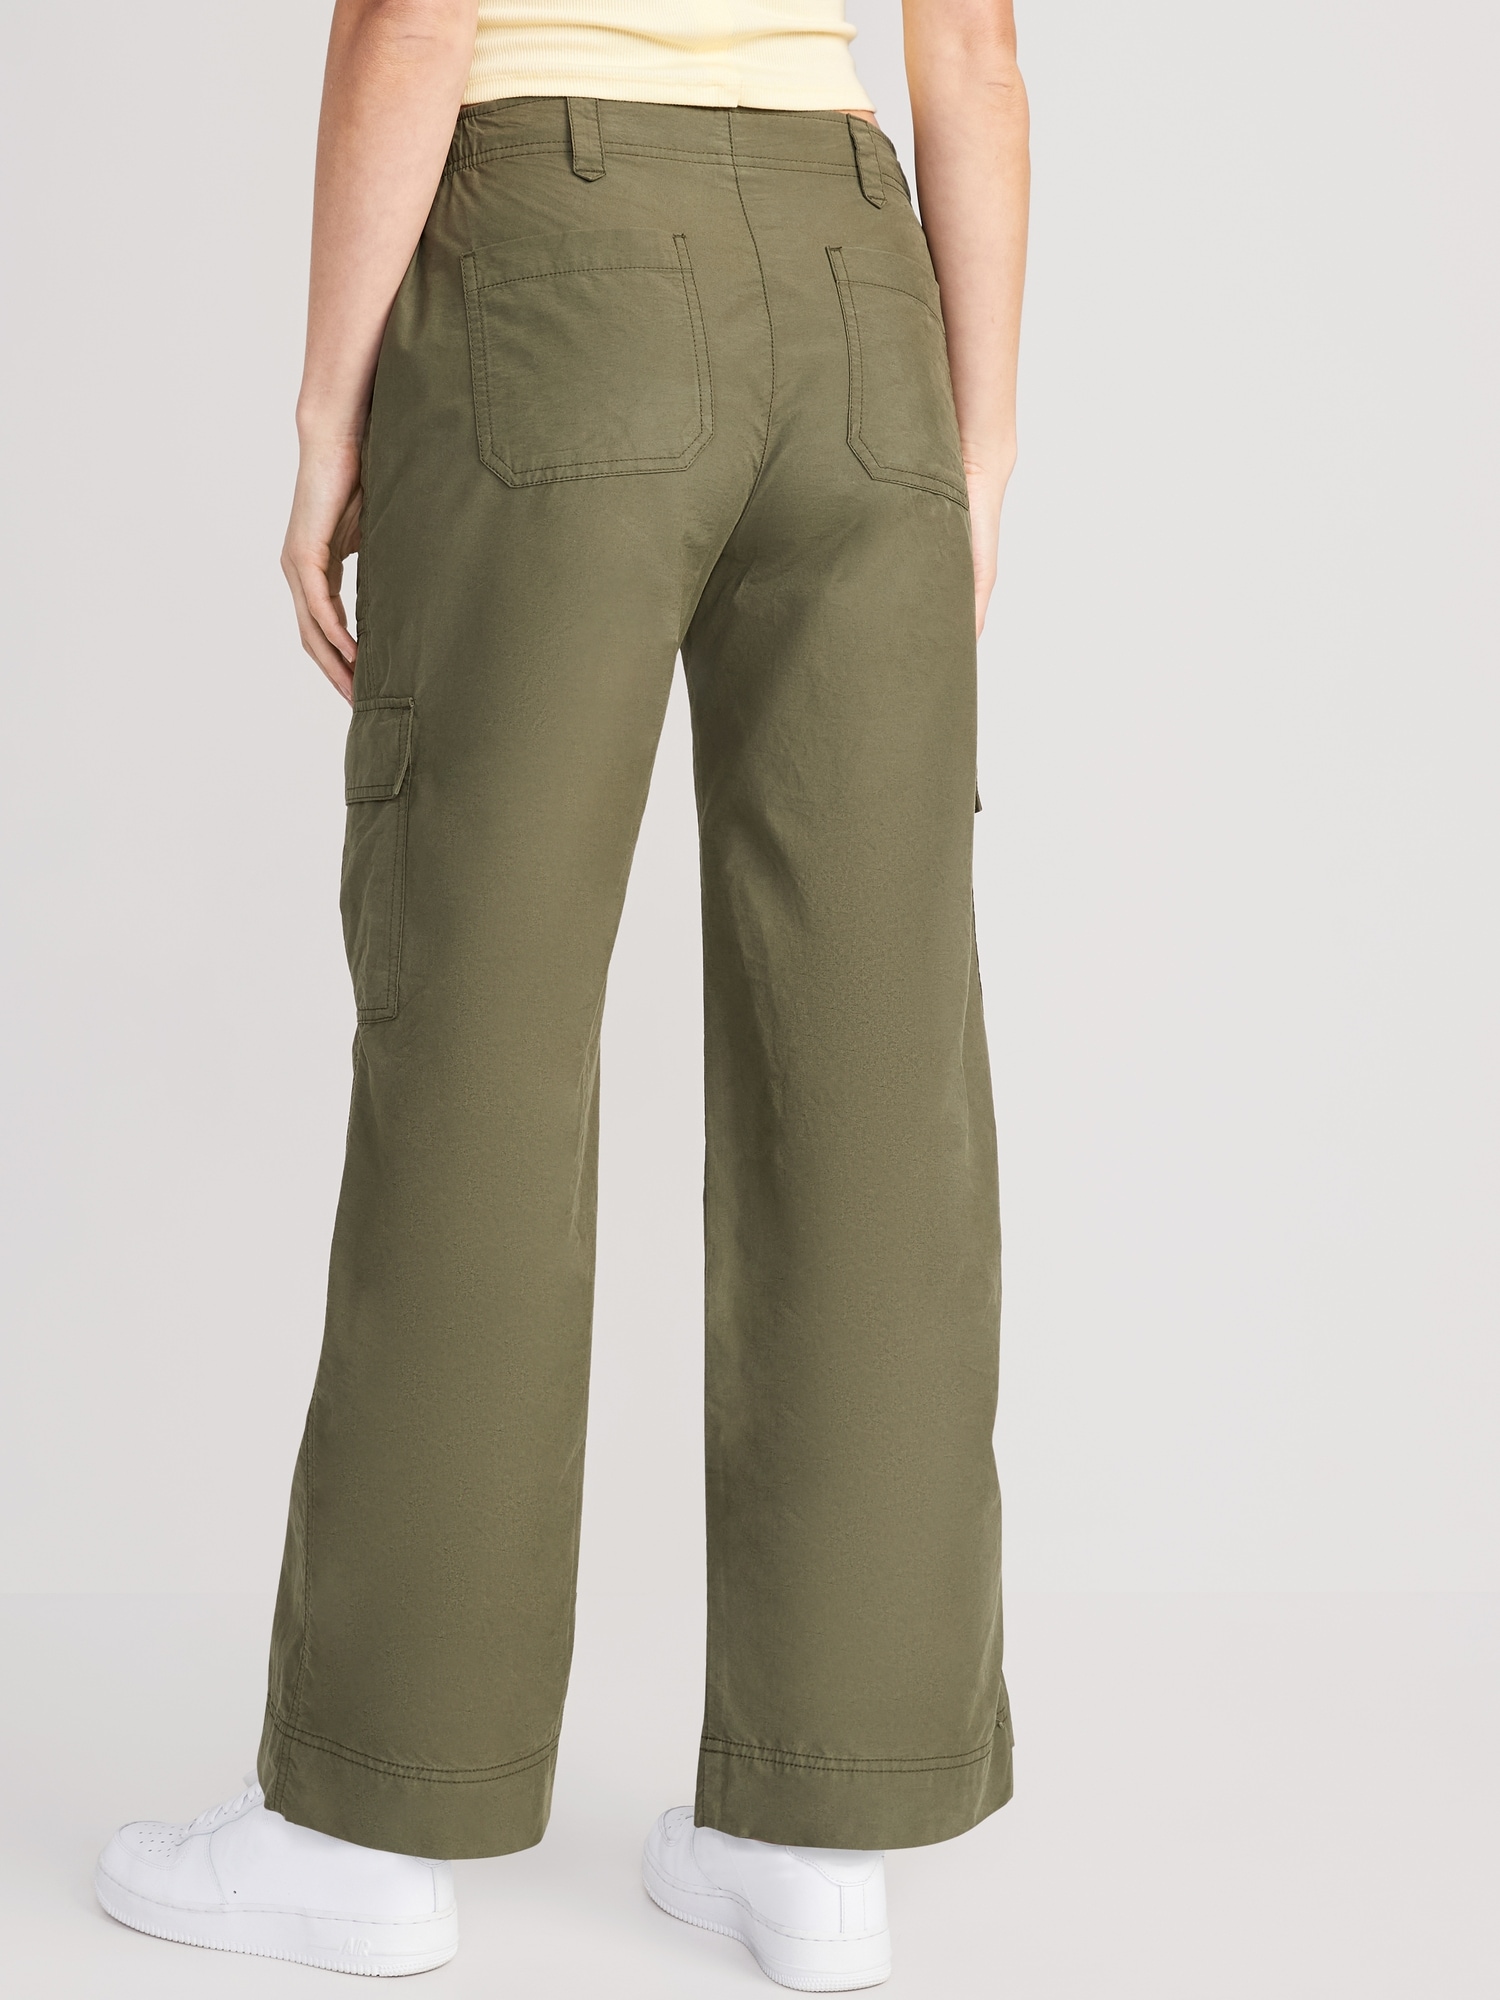 Old Navy Women's Khaki Pants Rockstar Super Skinny High Rise Secret  Slim Pockets | eBay